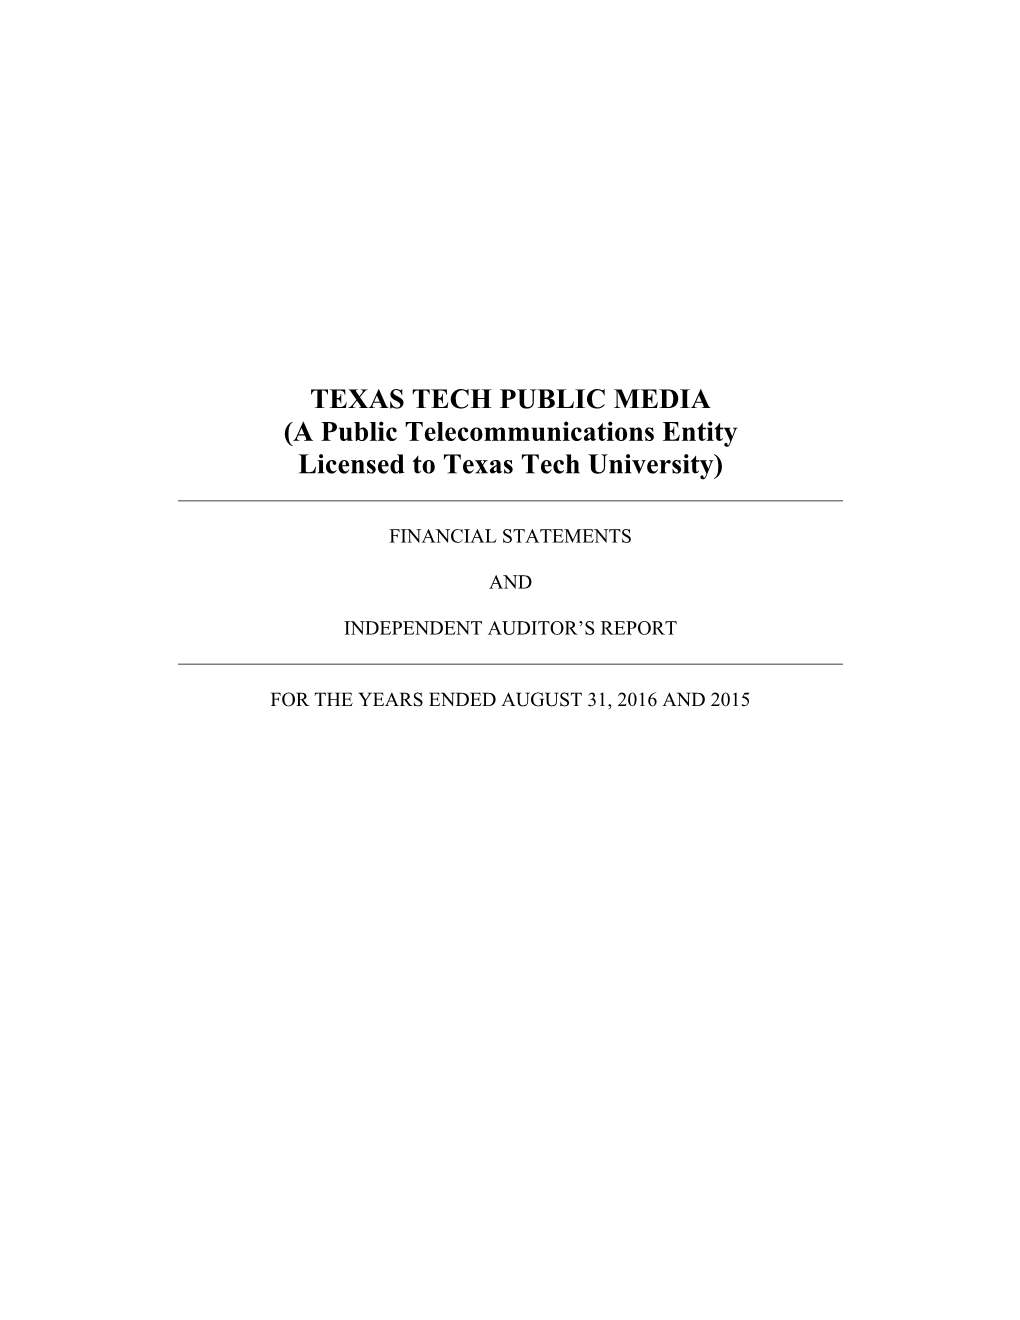 TEXAS TECH PUBLIC MEDIA (A Public Telecommunications Entity Licensed to Texas Tech University)